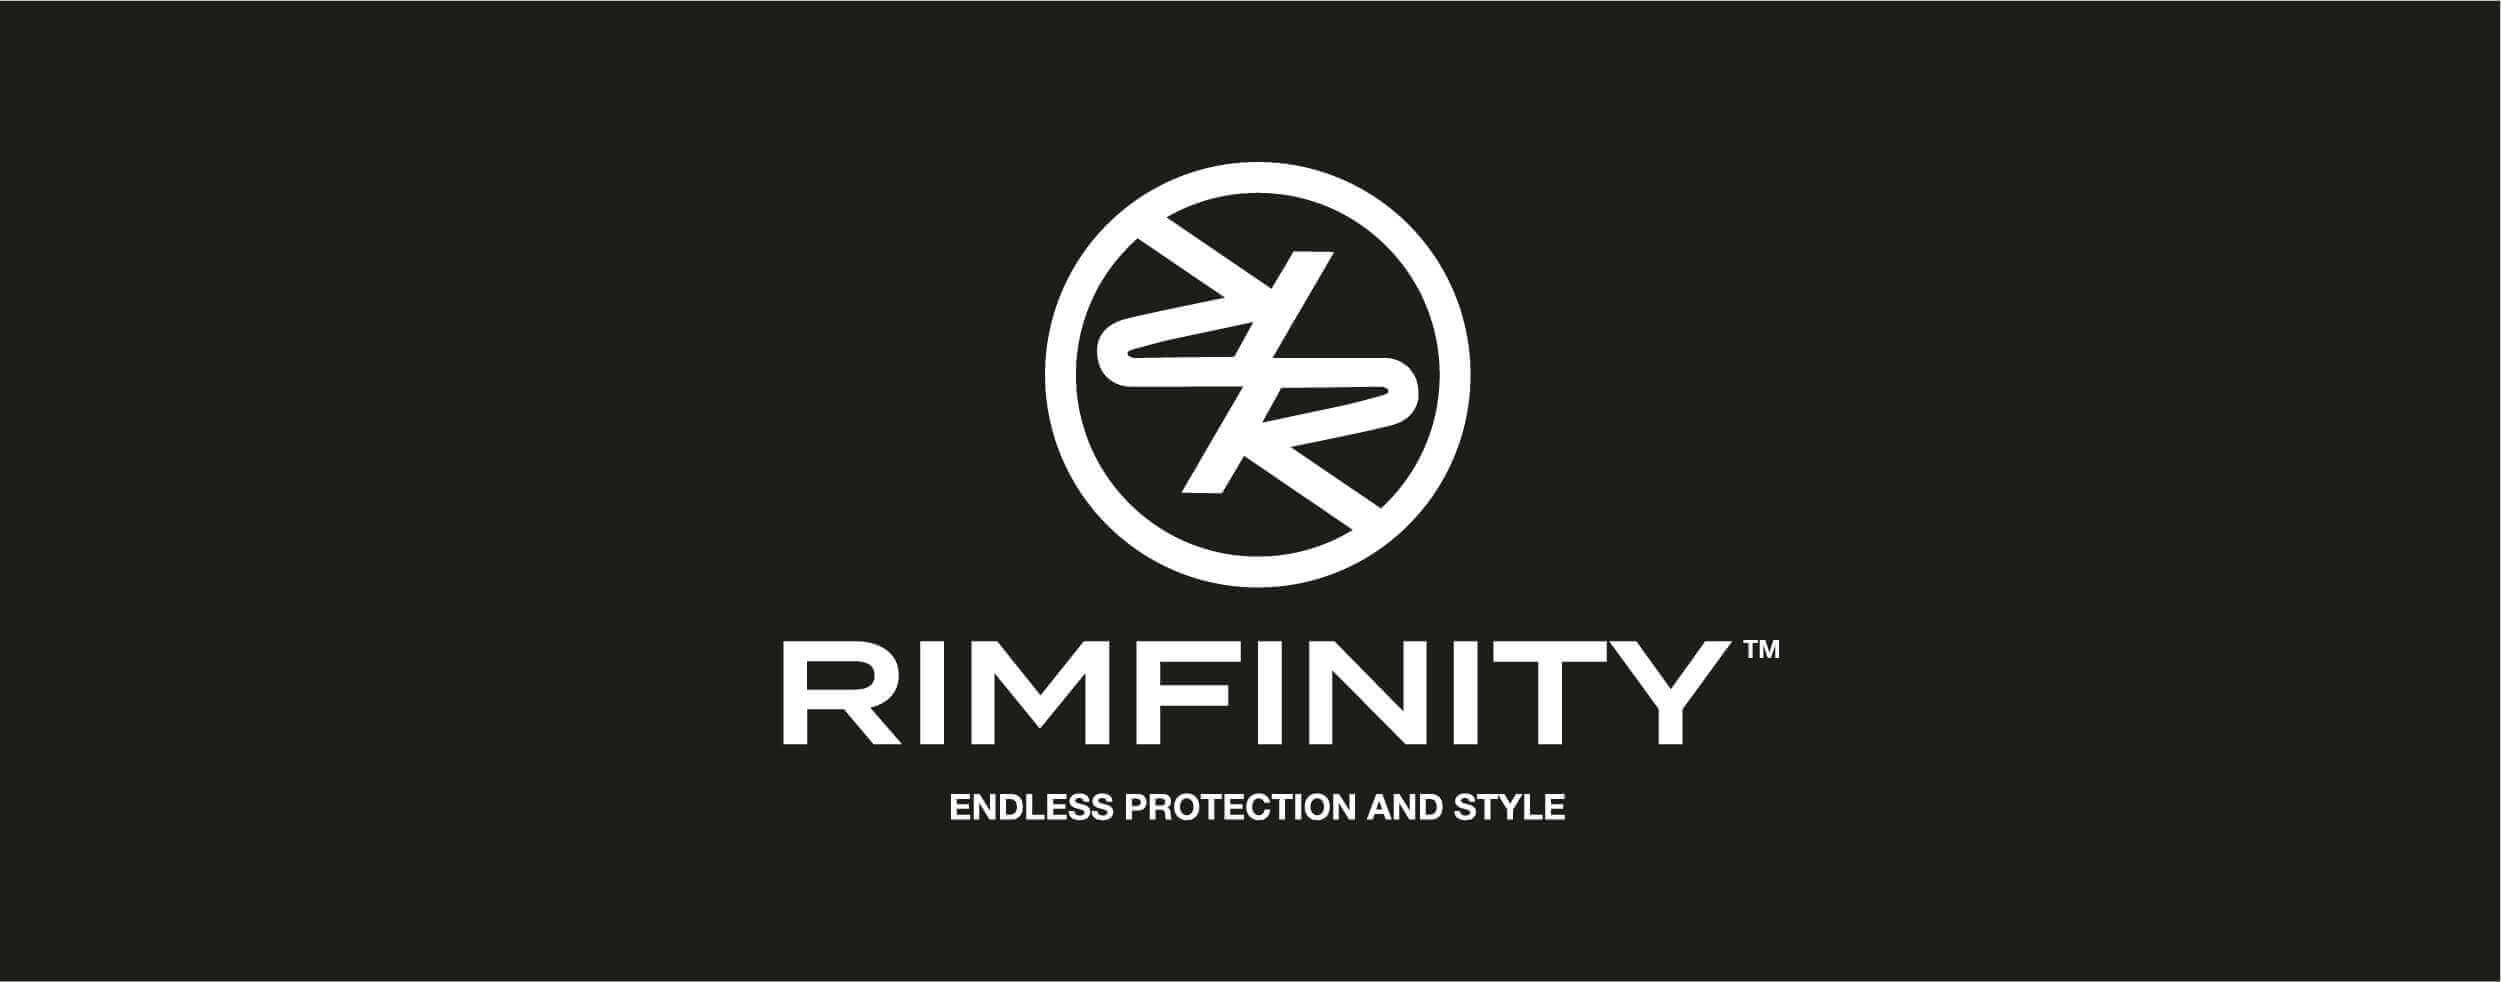 rimfinity logo